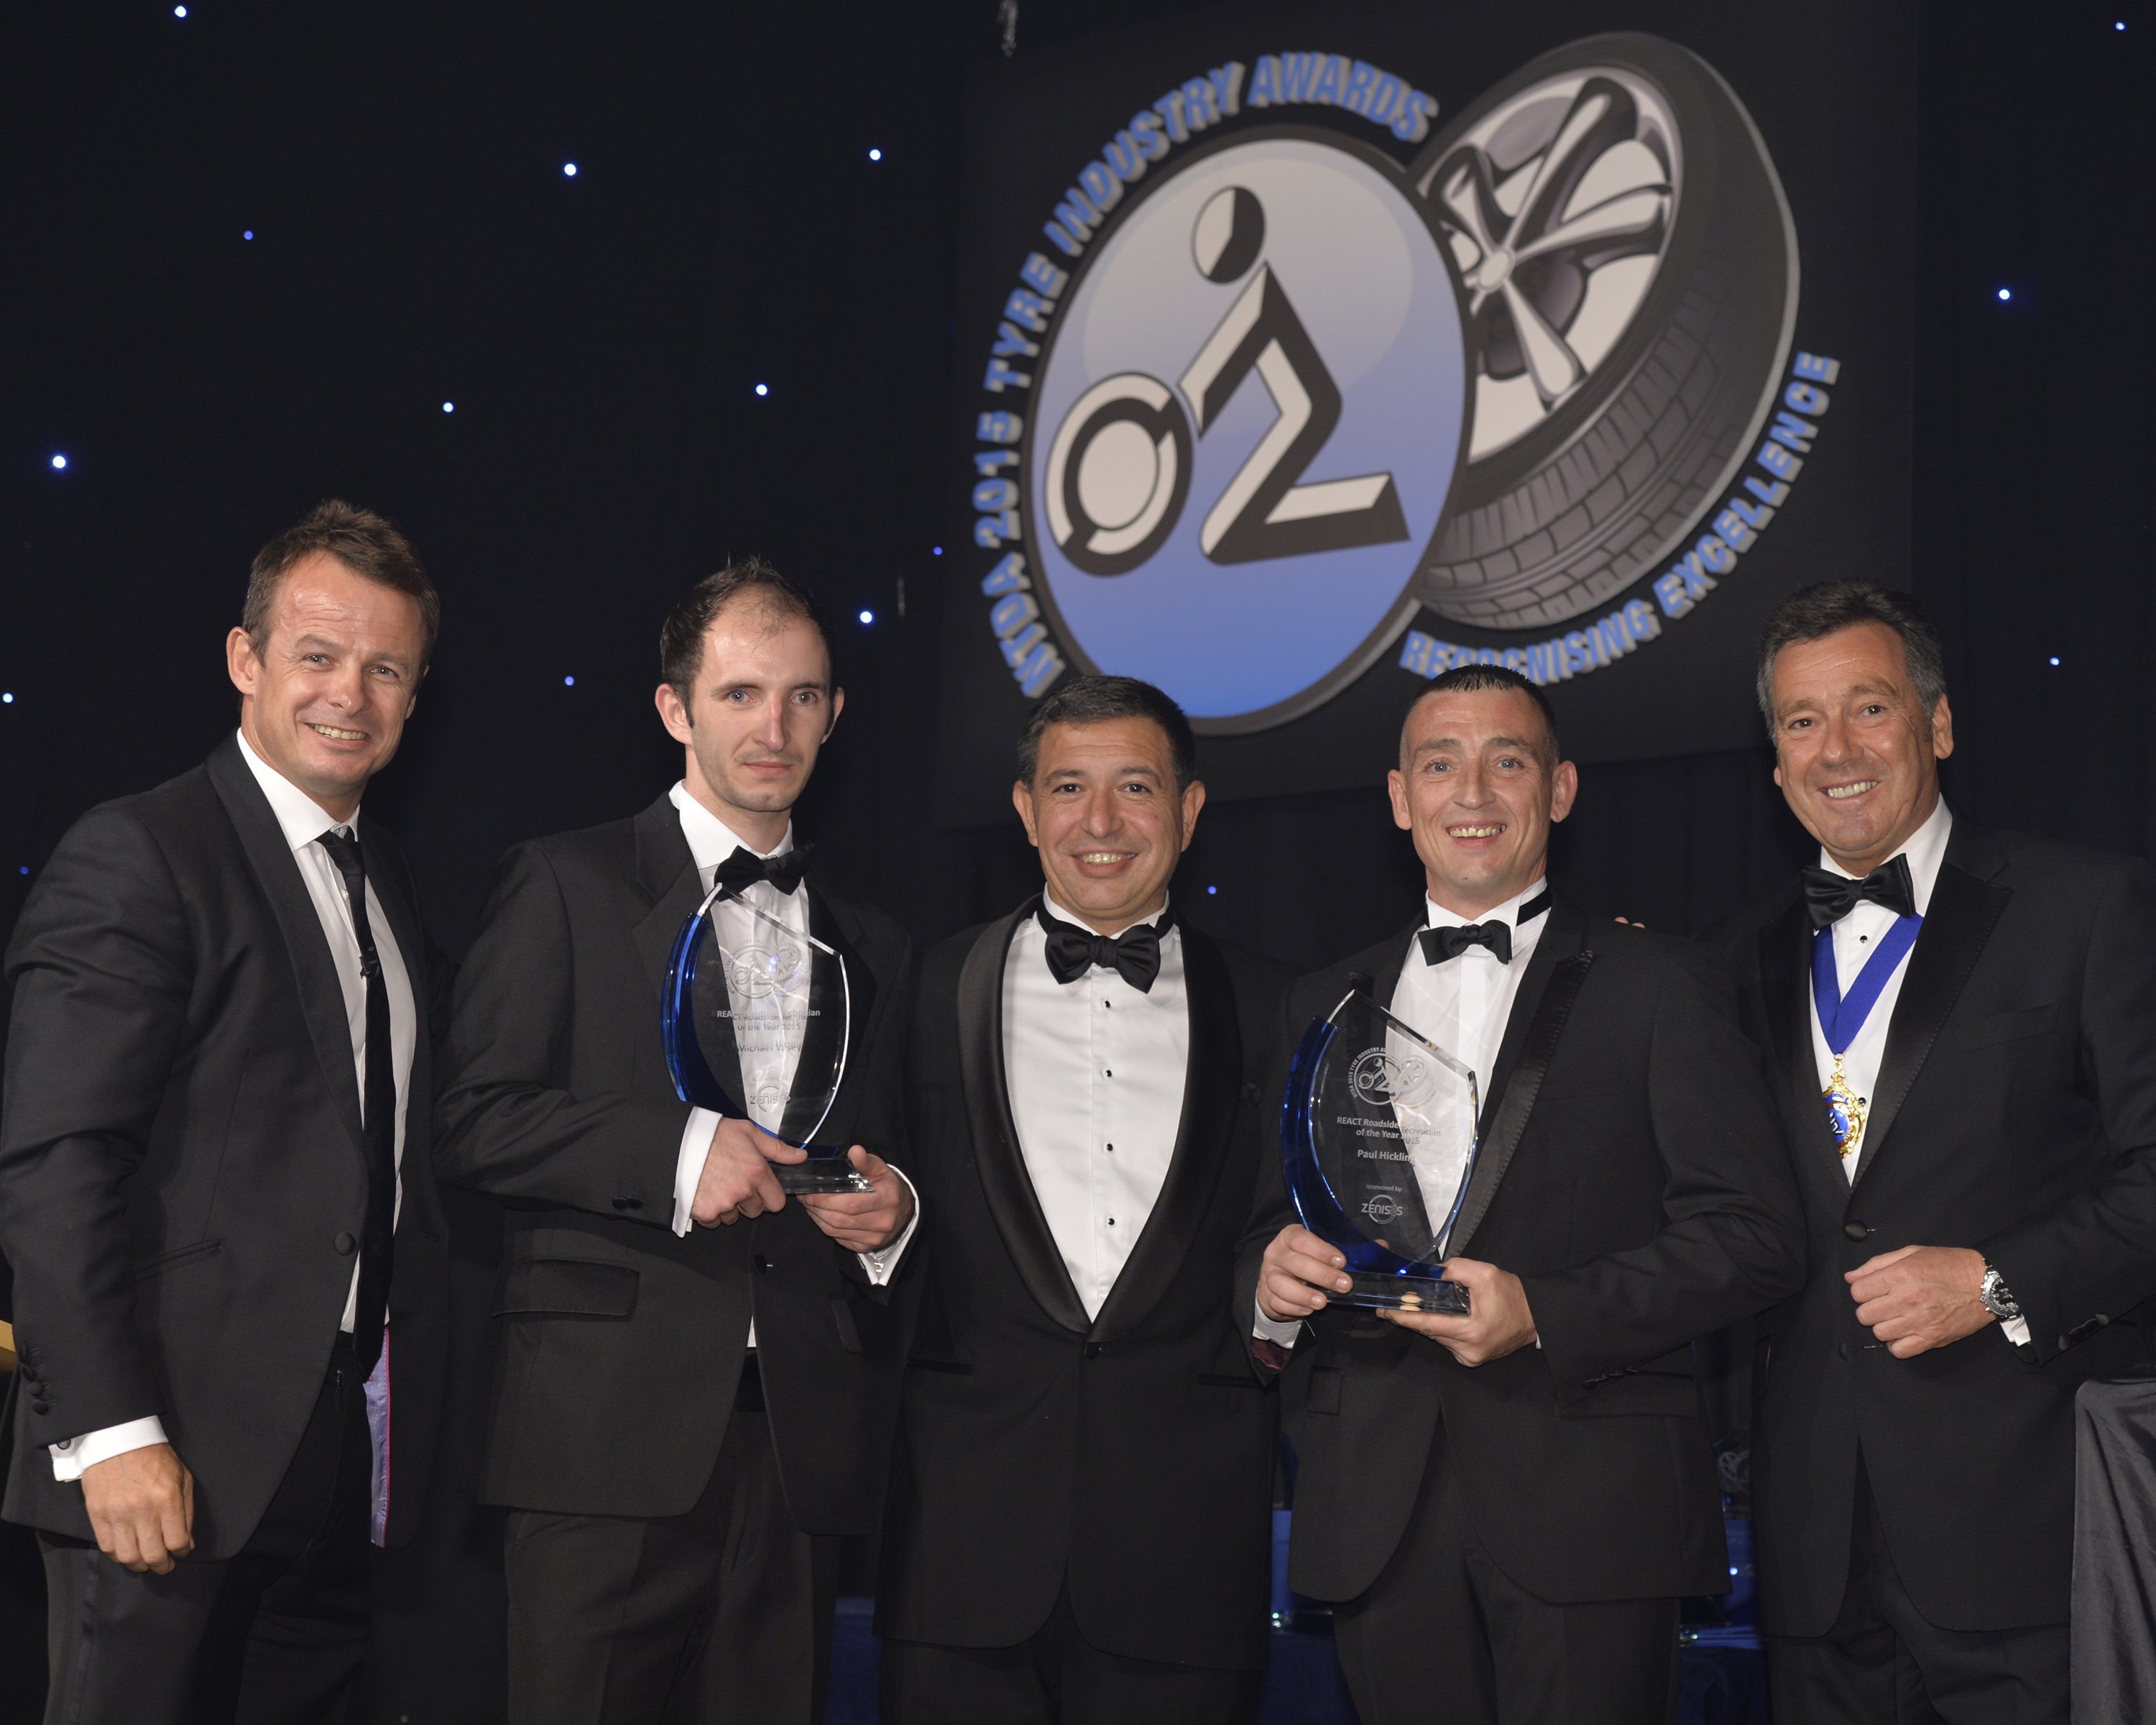 ATS Euromaster’s Vasey ‘honoured’ by Roadside Technician award